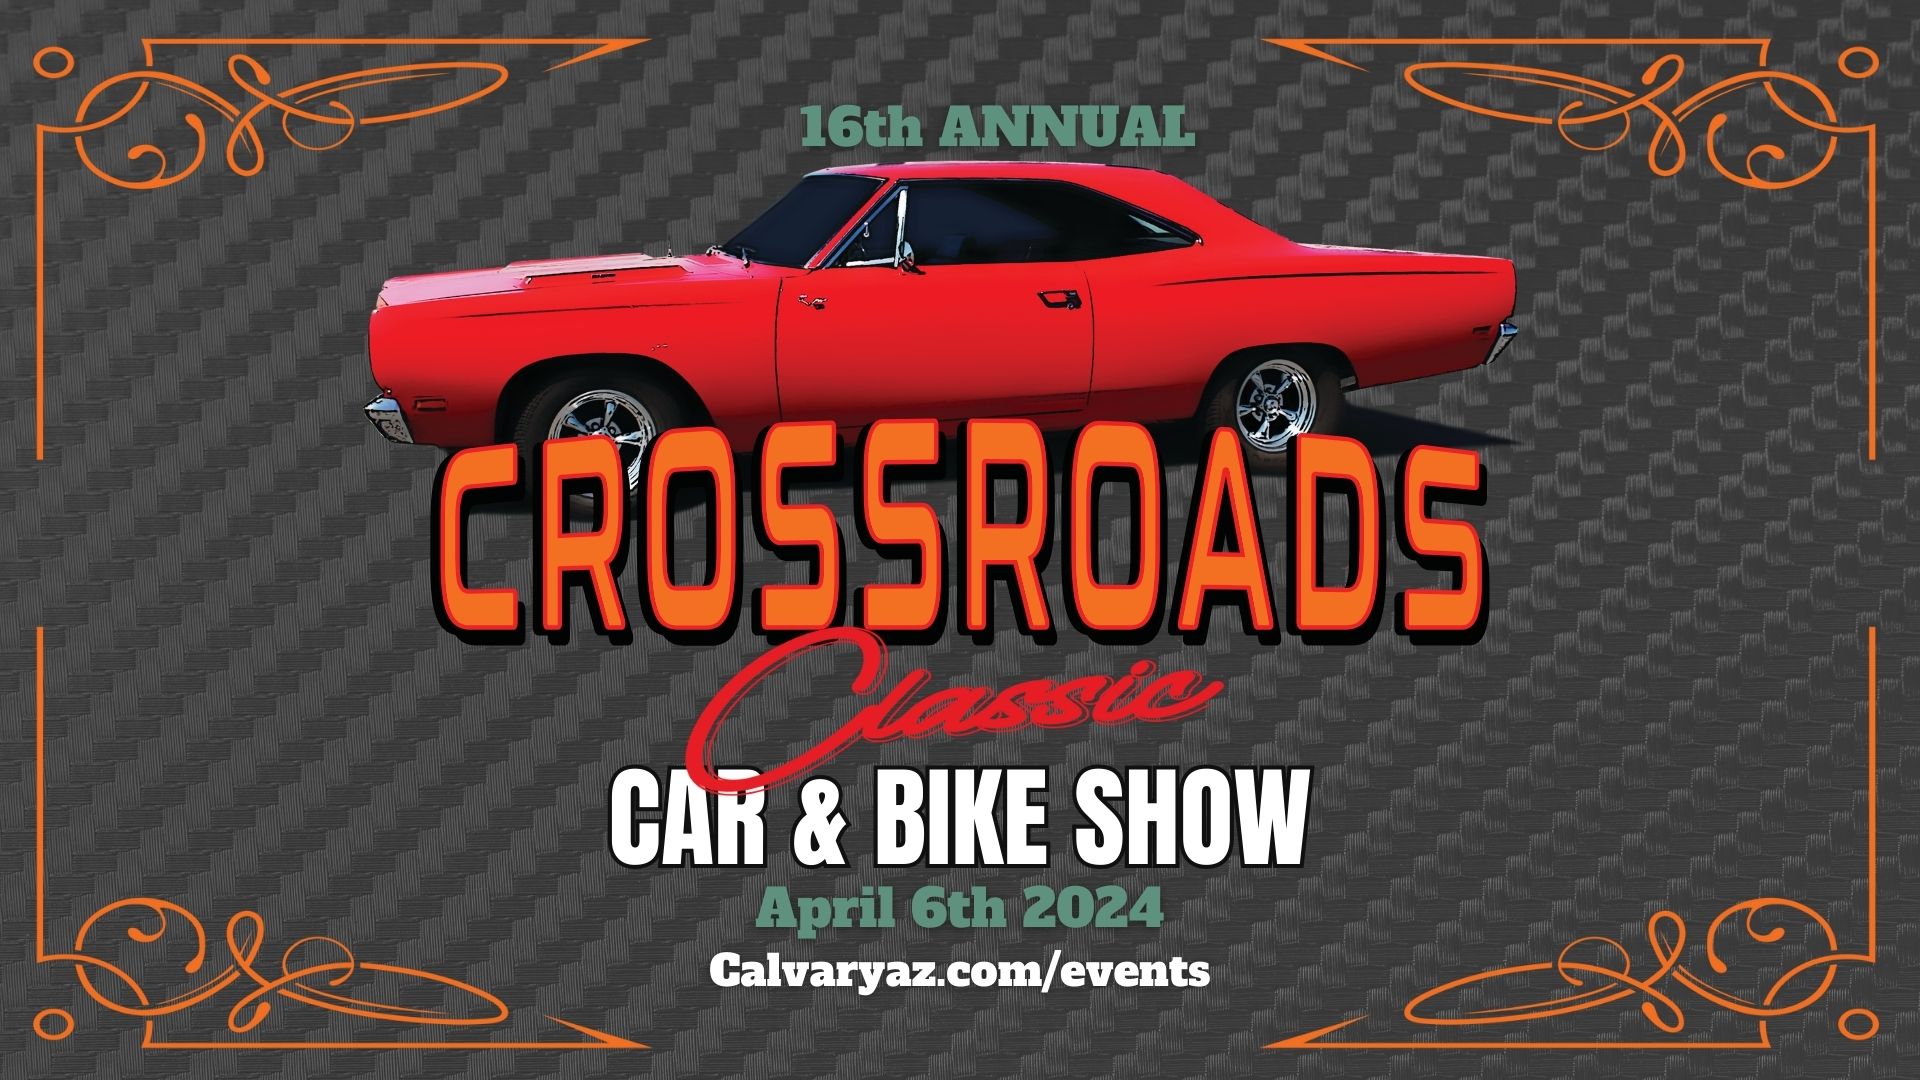 16th Annual Crossroads Car & Bike Show